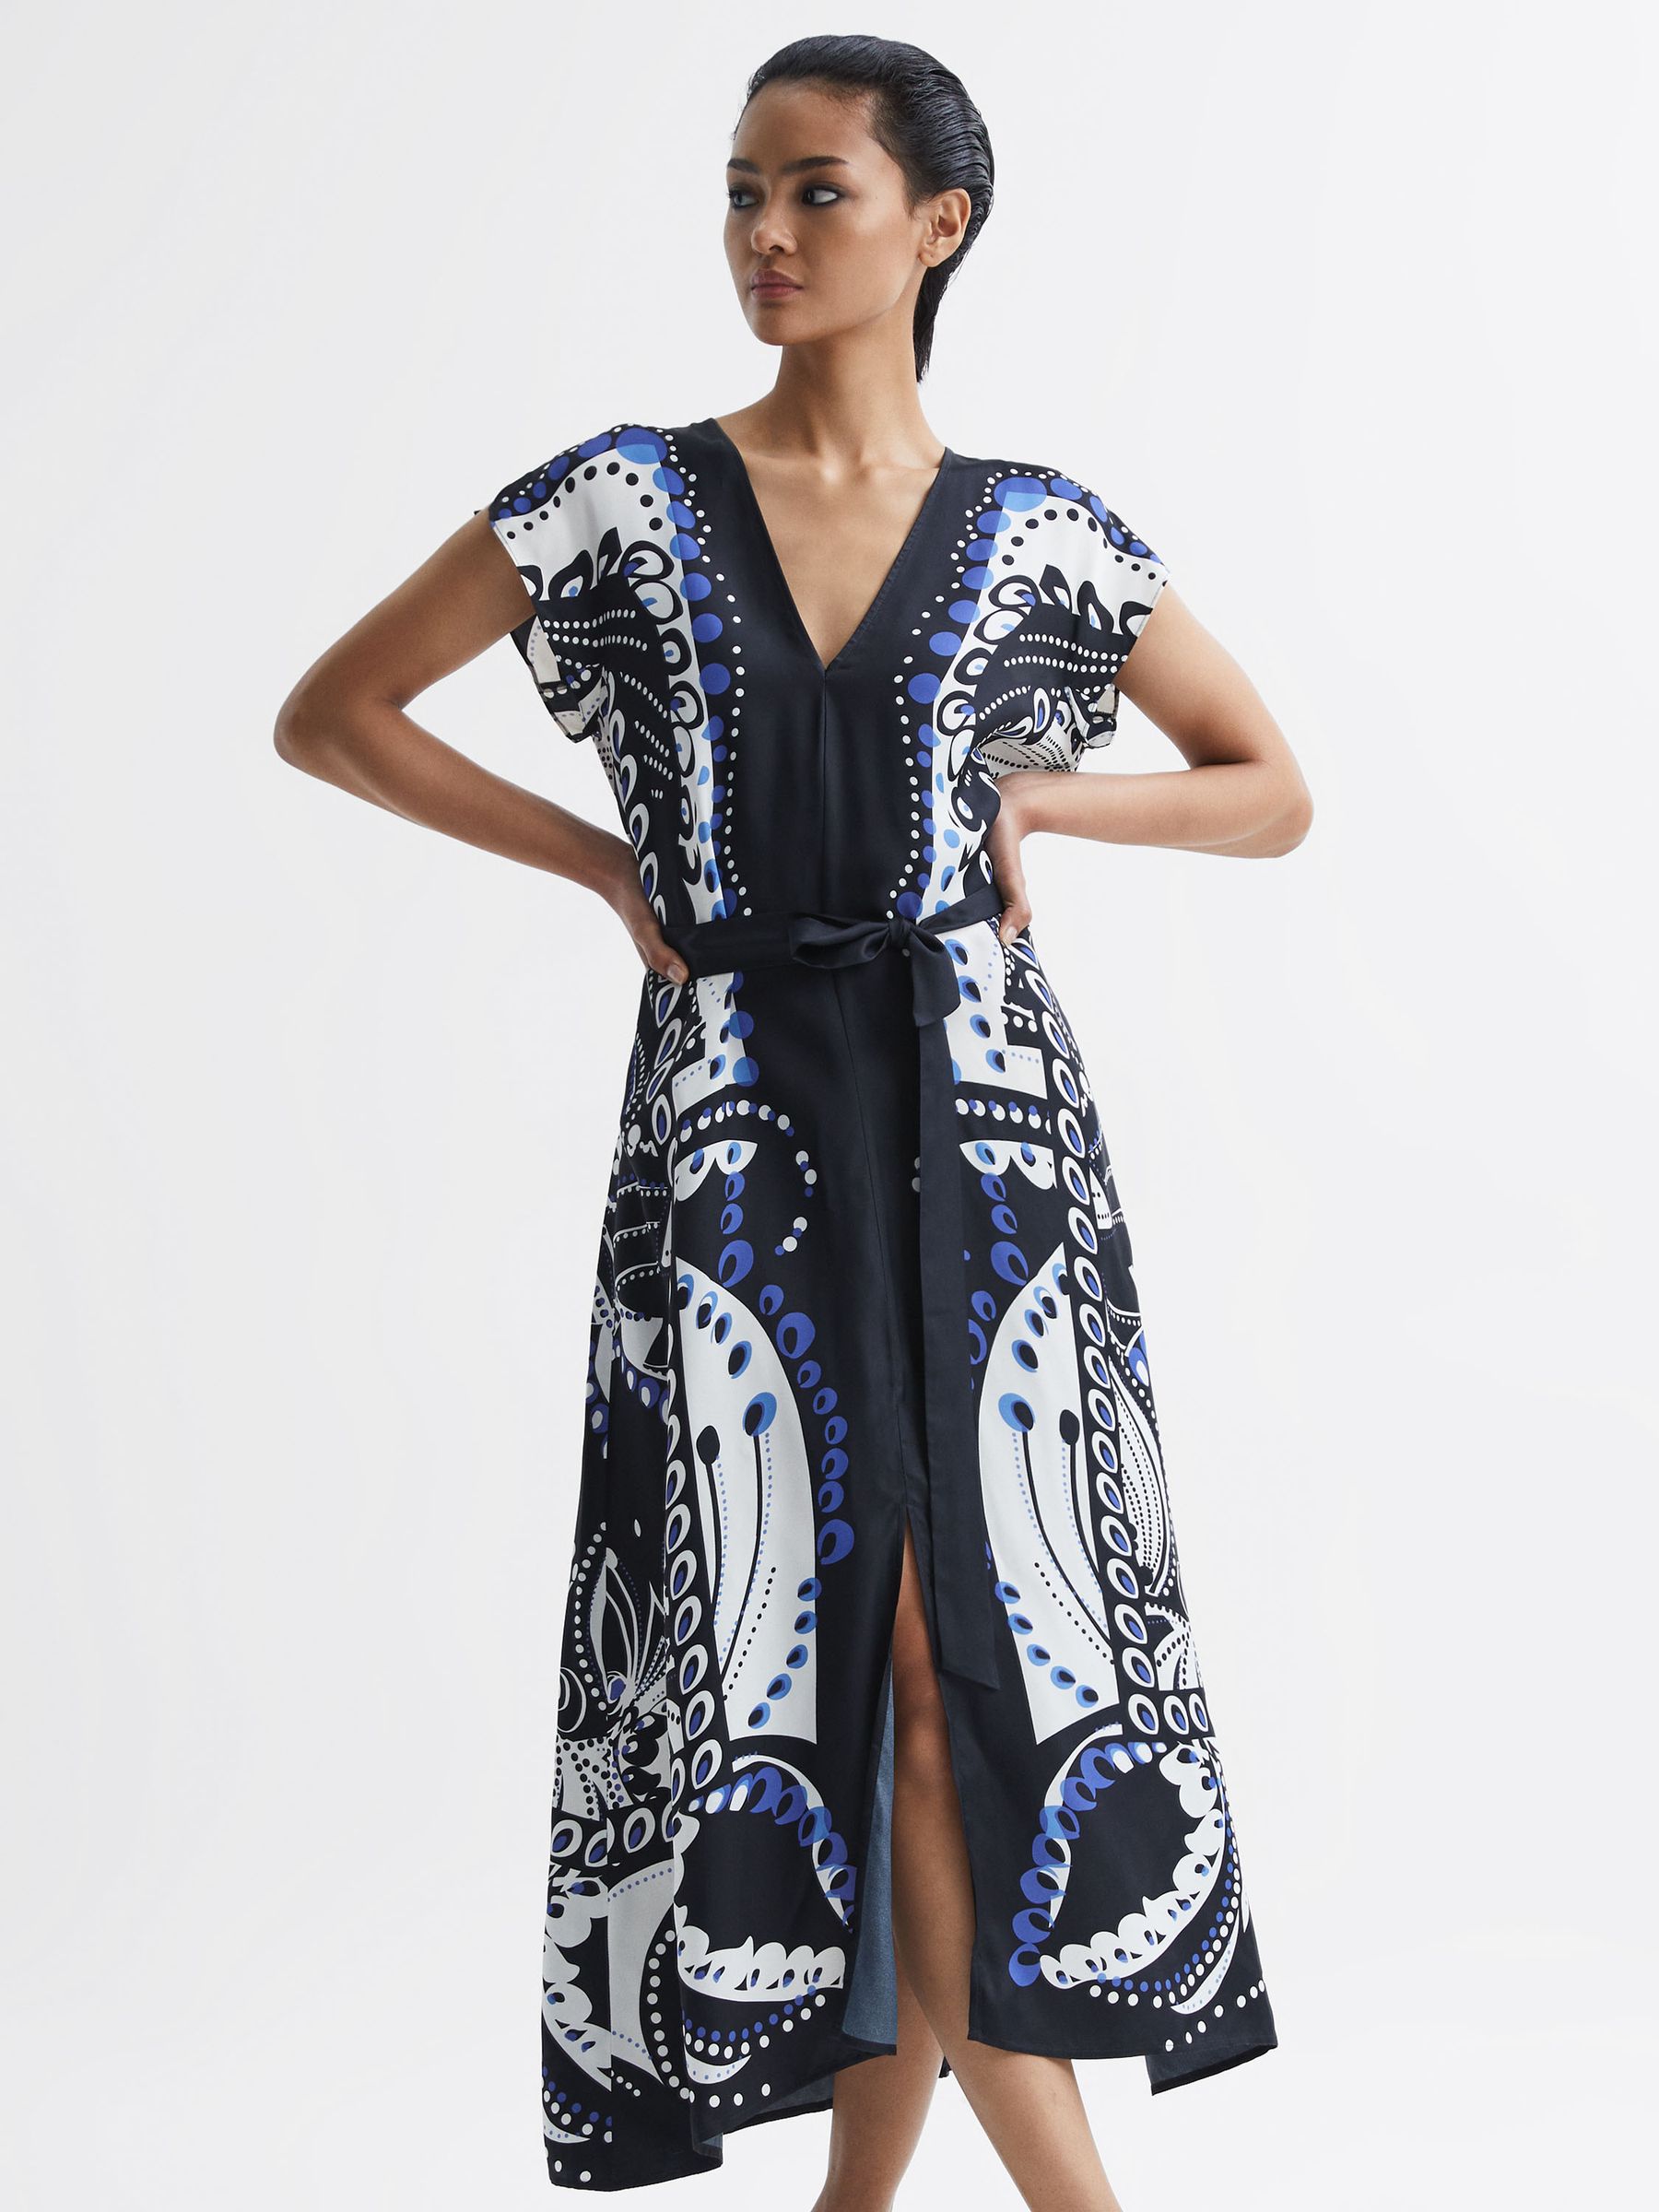 Reiss Freja Scarf Printed Midi Dress | REISS USA